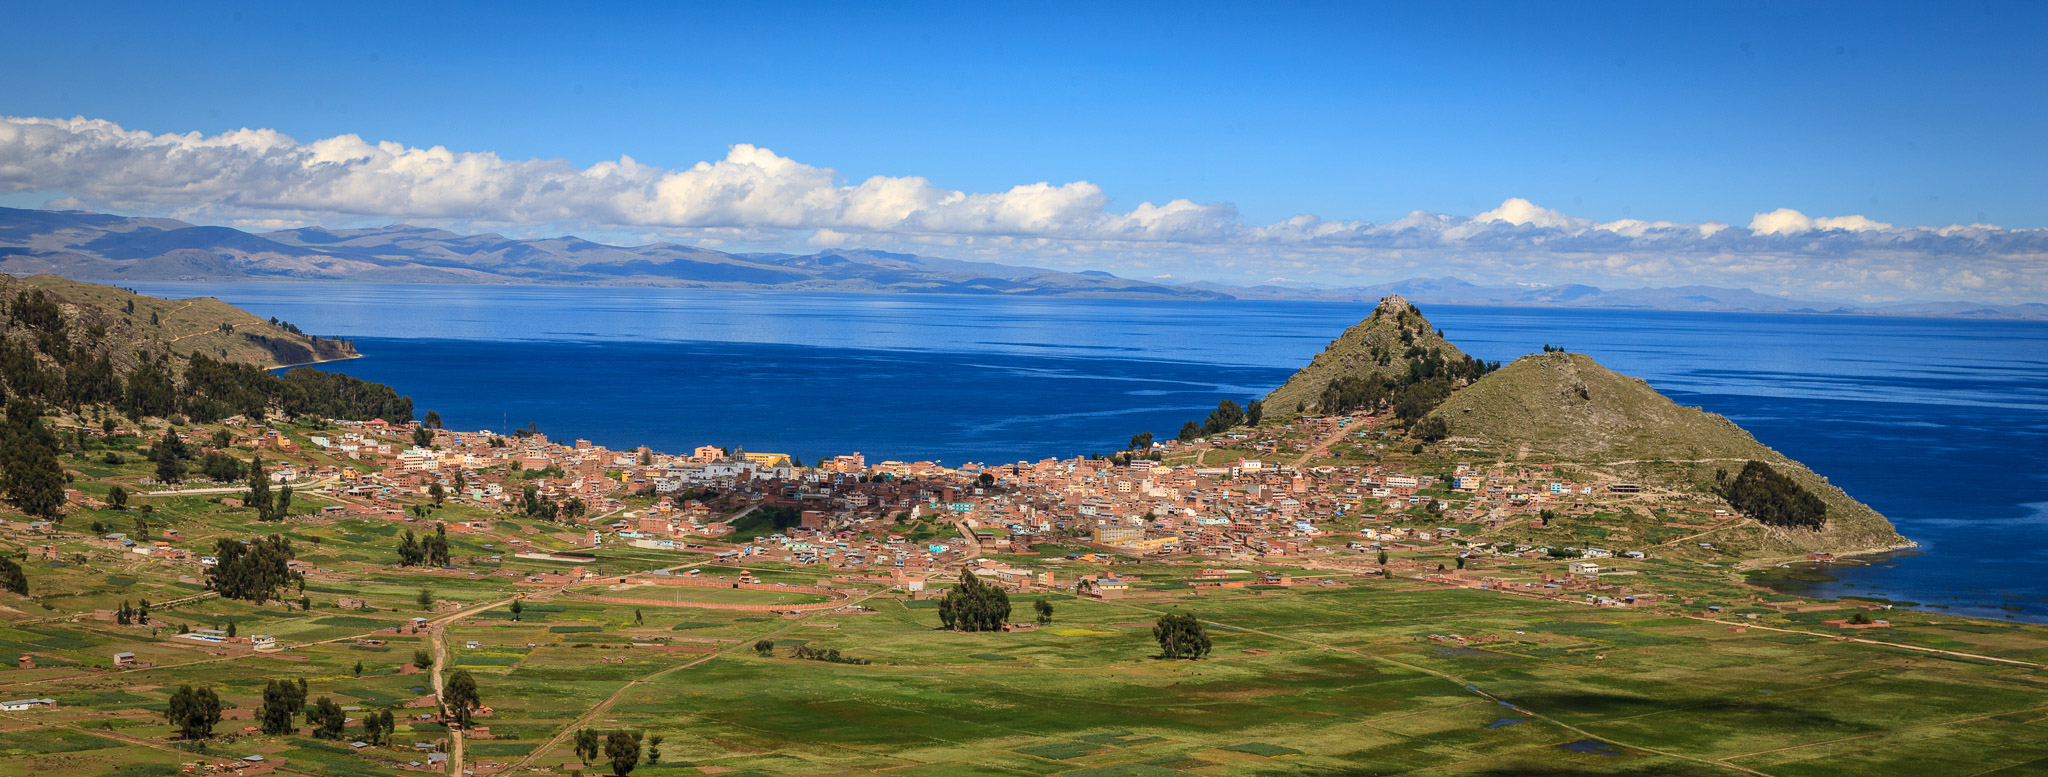 Town of Copacabana, Lake Titicaca